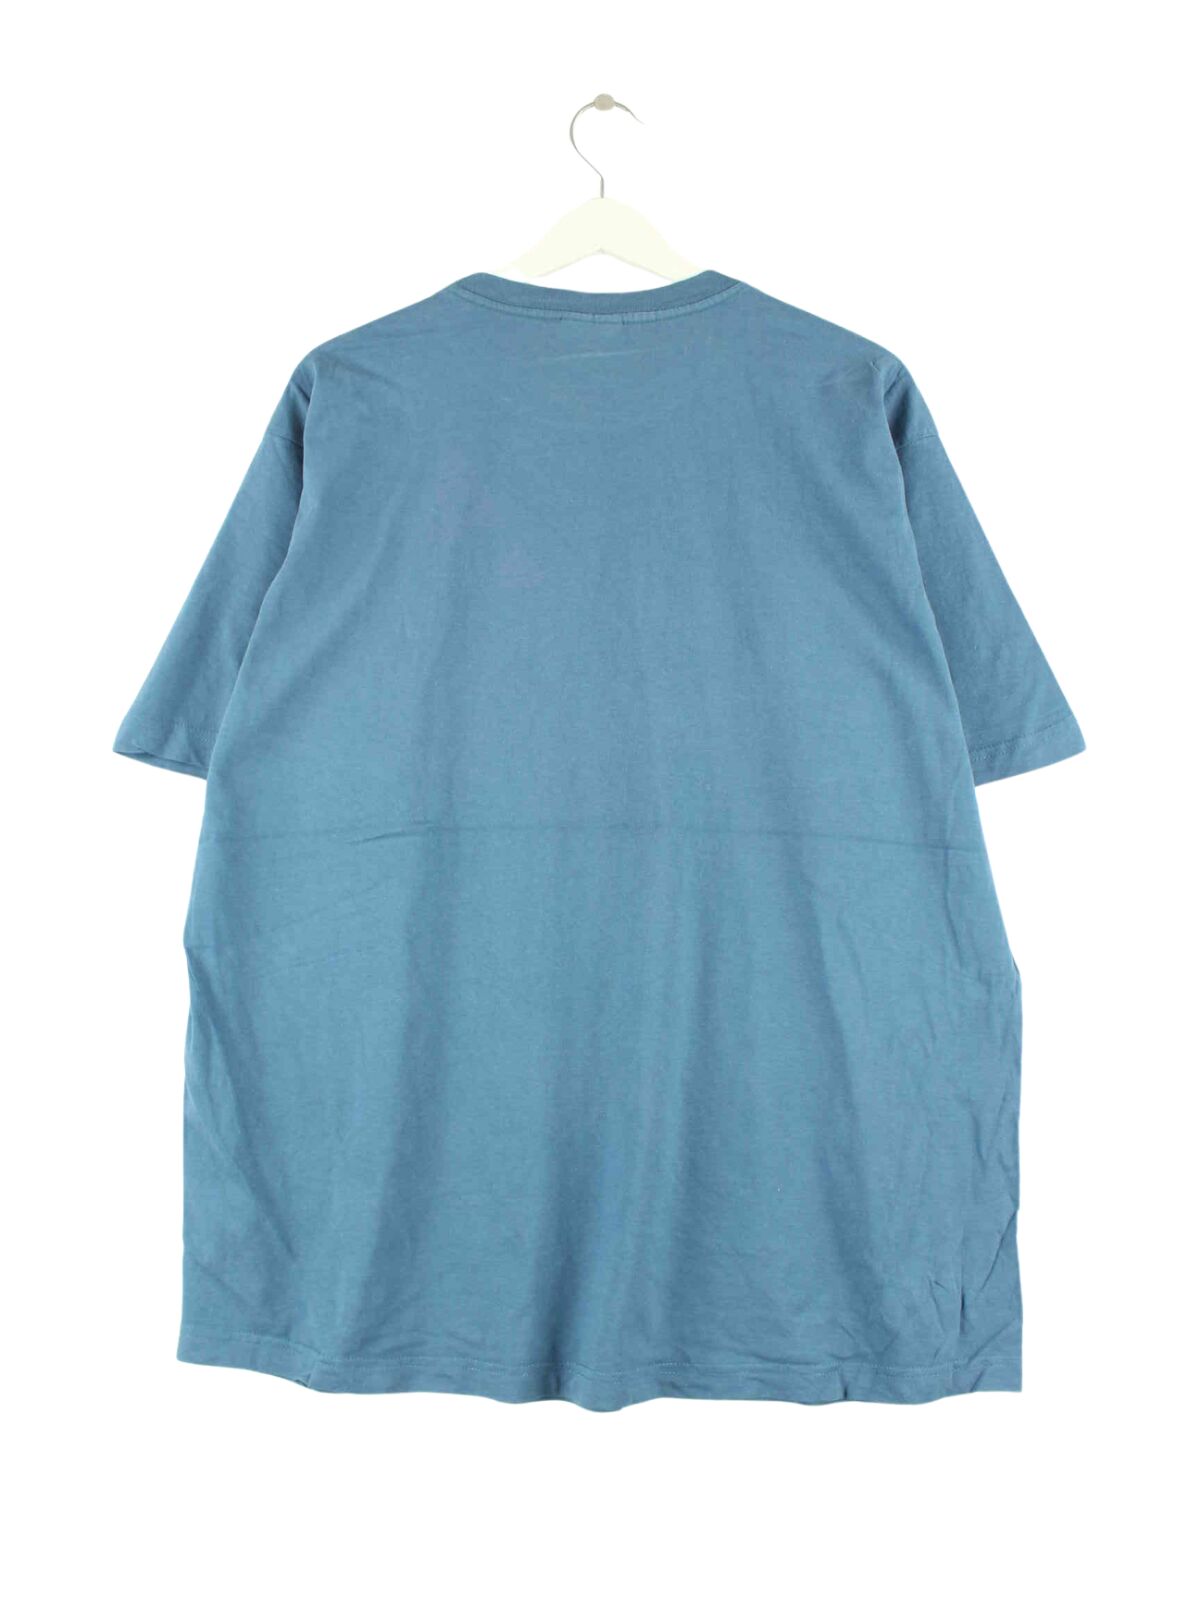 Nautica Basic T-Shirt Blau L (back image)